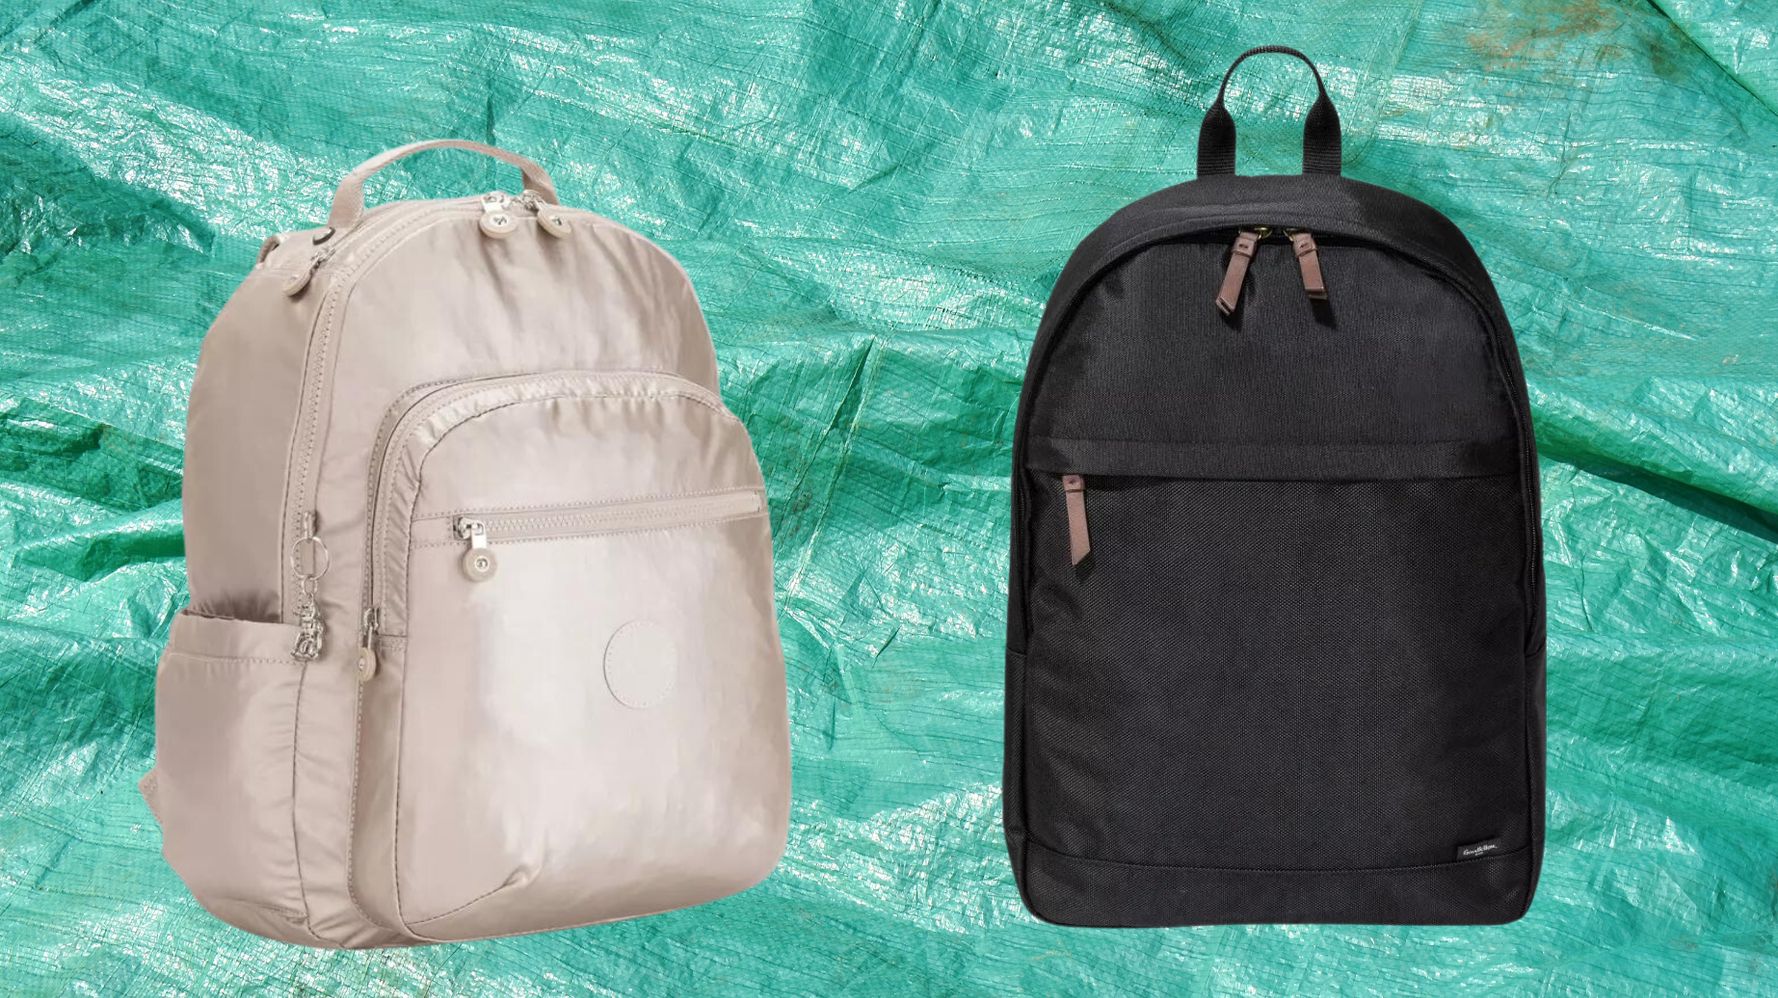 Kipling City Pack Mini Backpack : Target